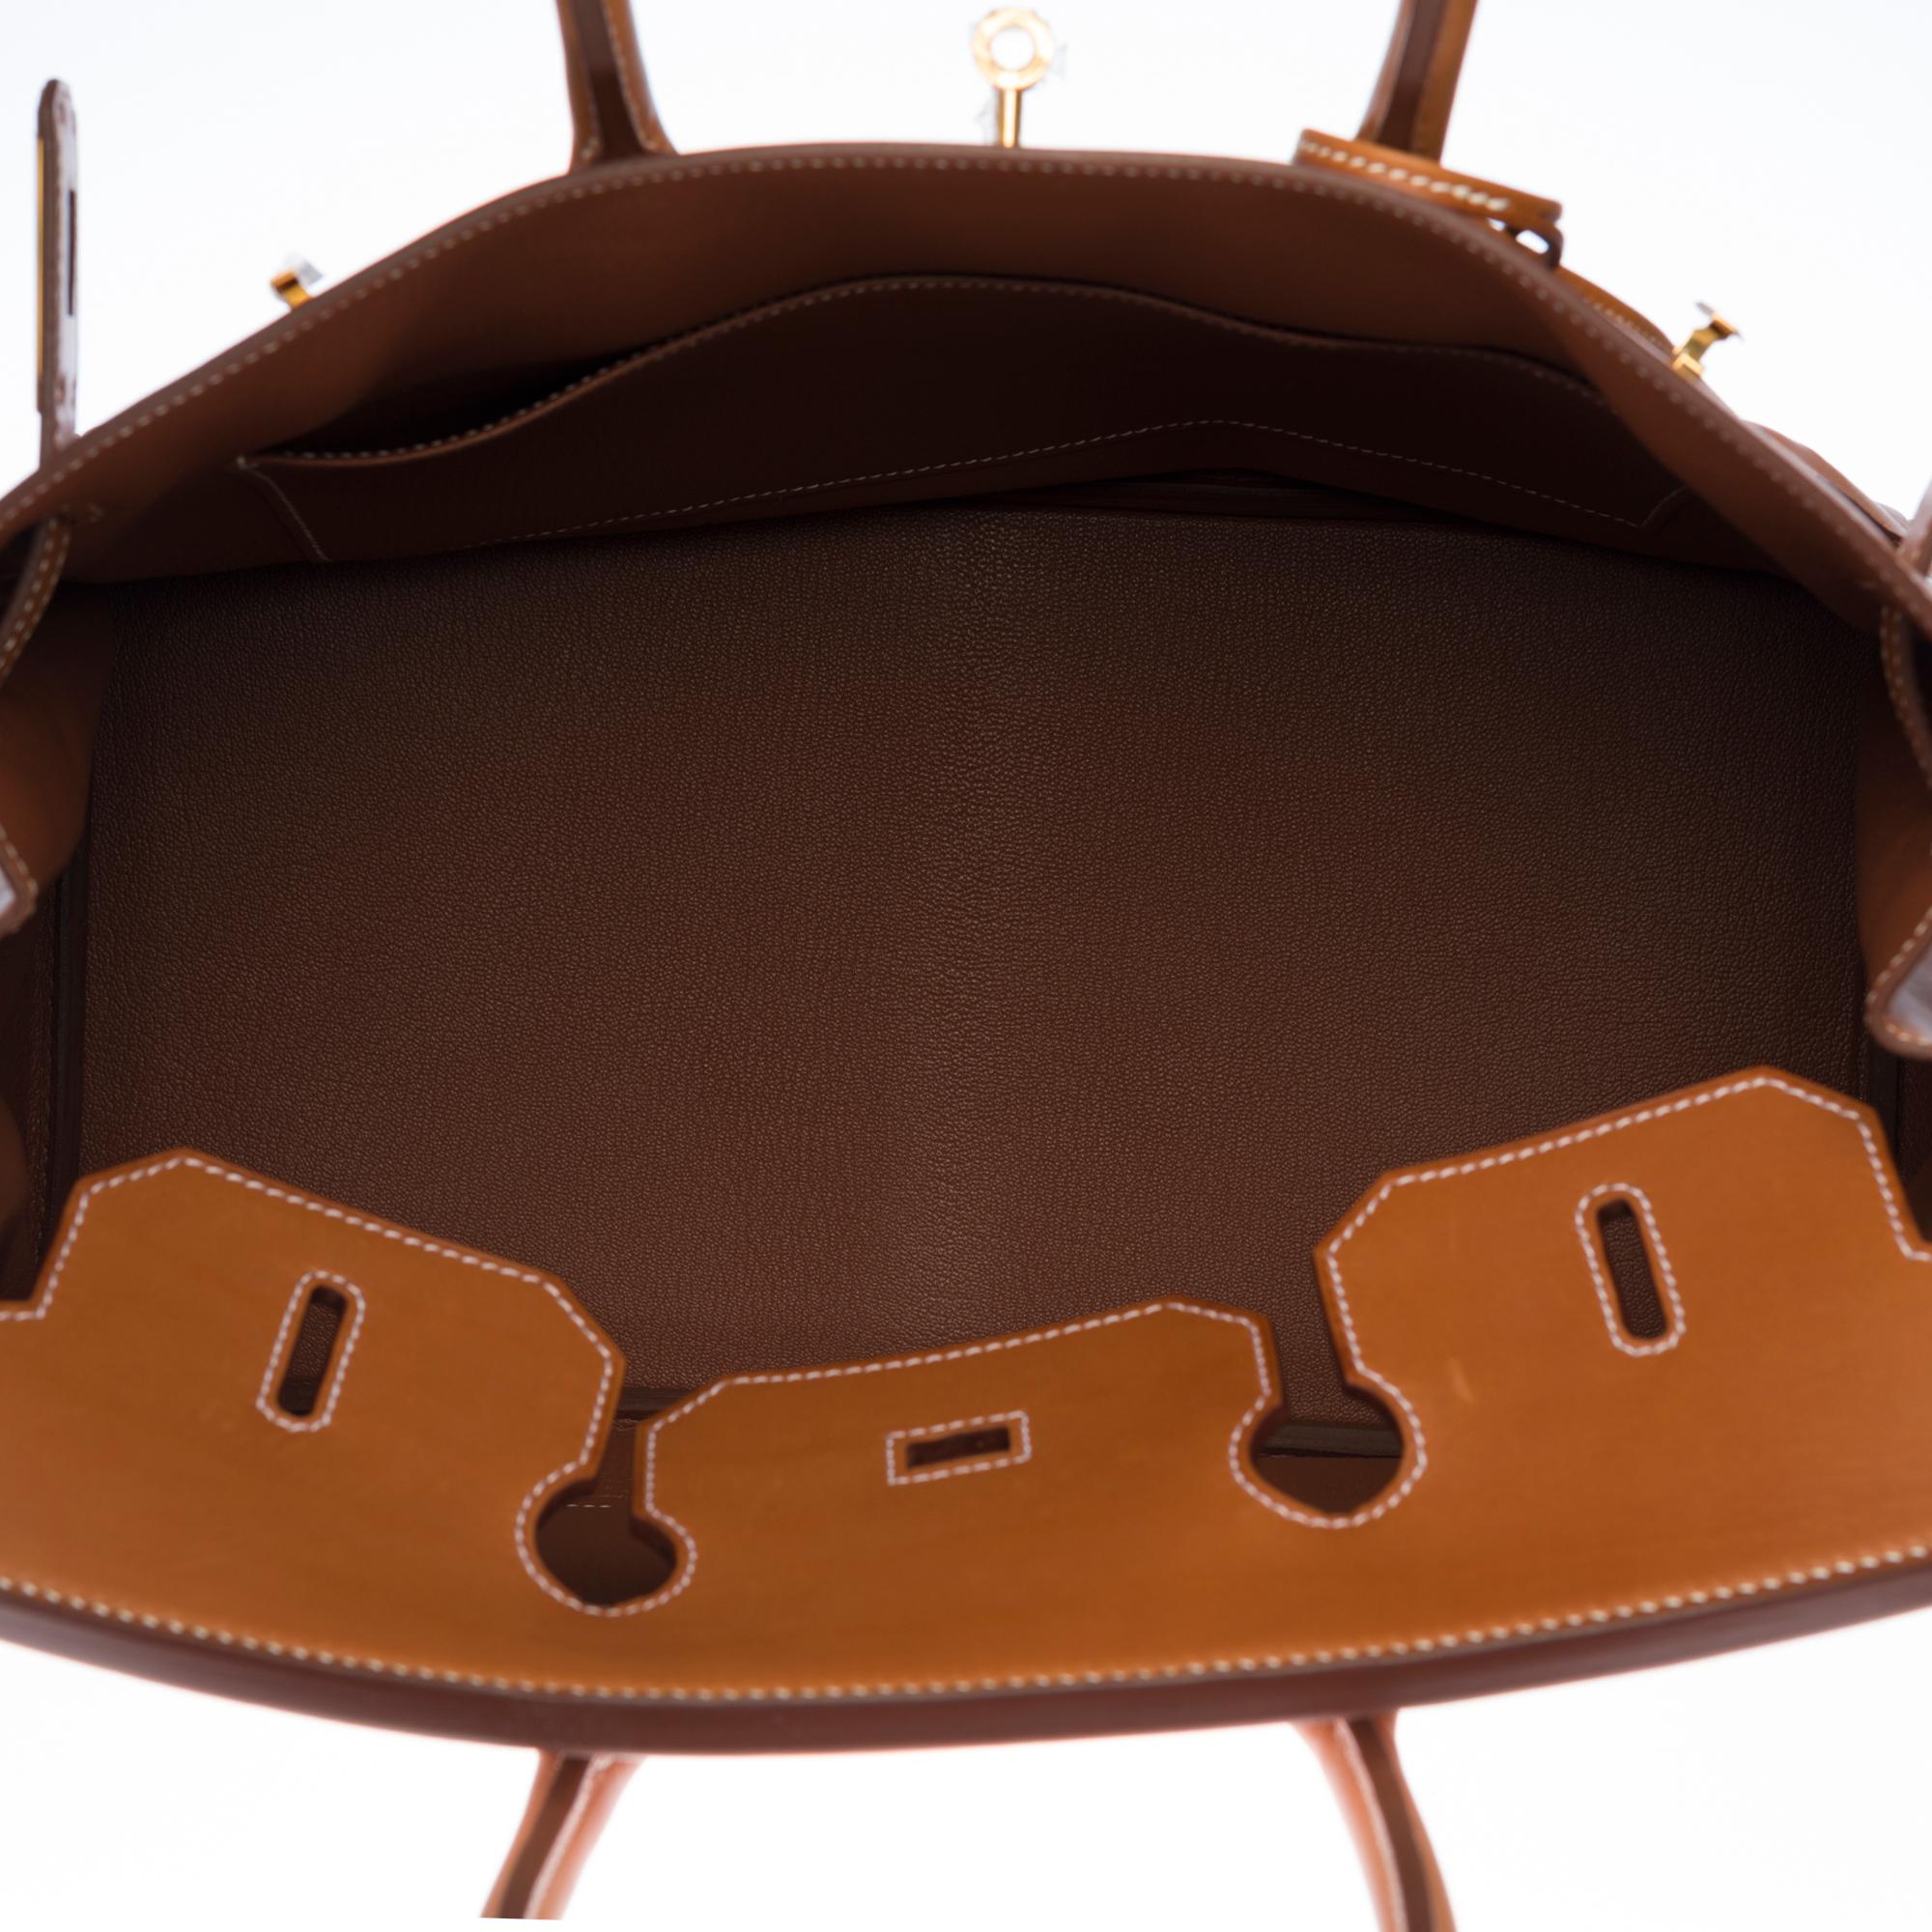 NEW - ULTRA RARE- Hermès Birkin 35 handbag in Gold Barenia leather, GHW 2